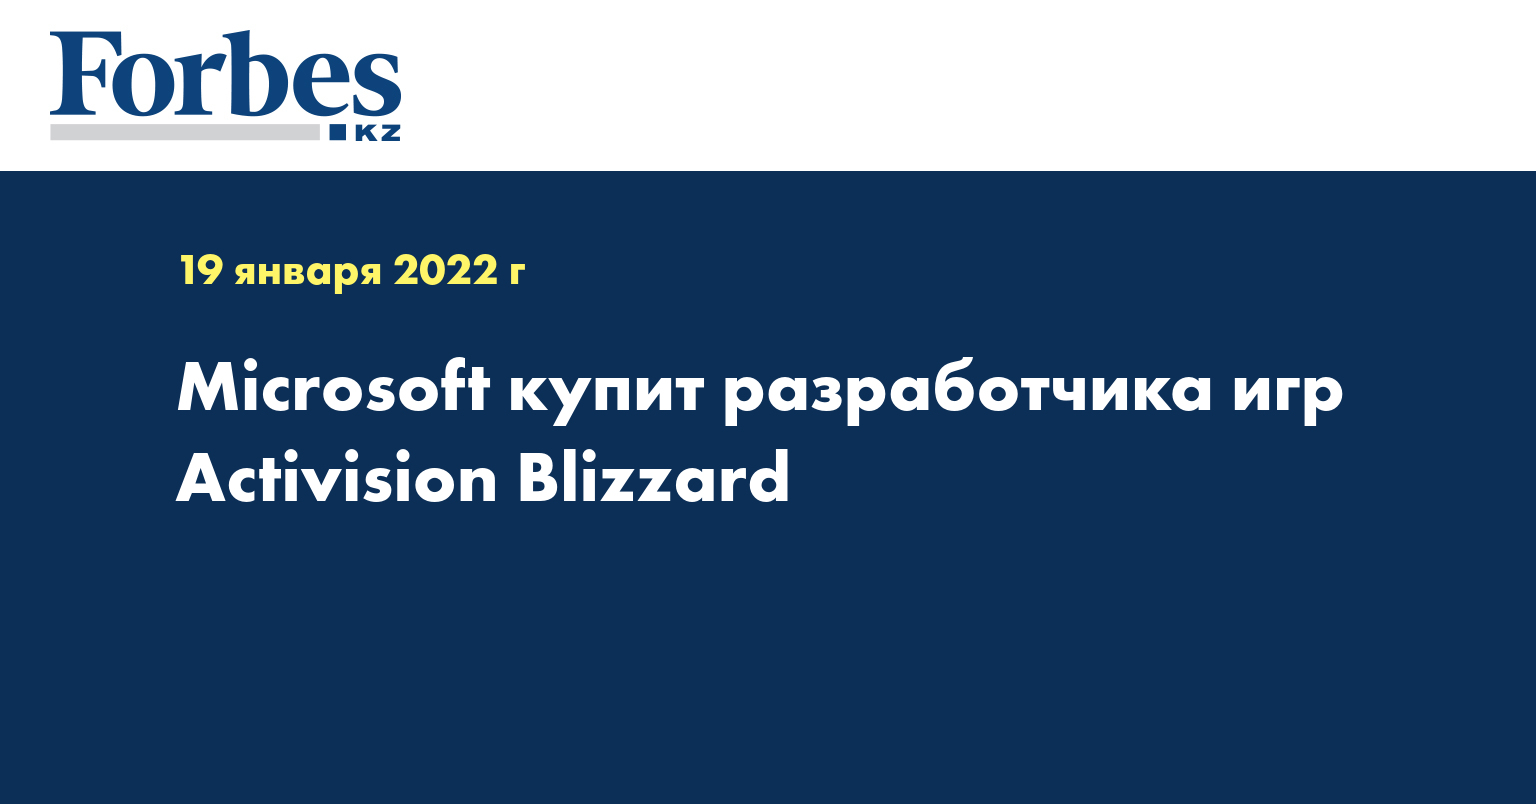 Microsoft купит разработчика игр Activision Blizzard